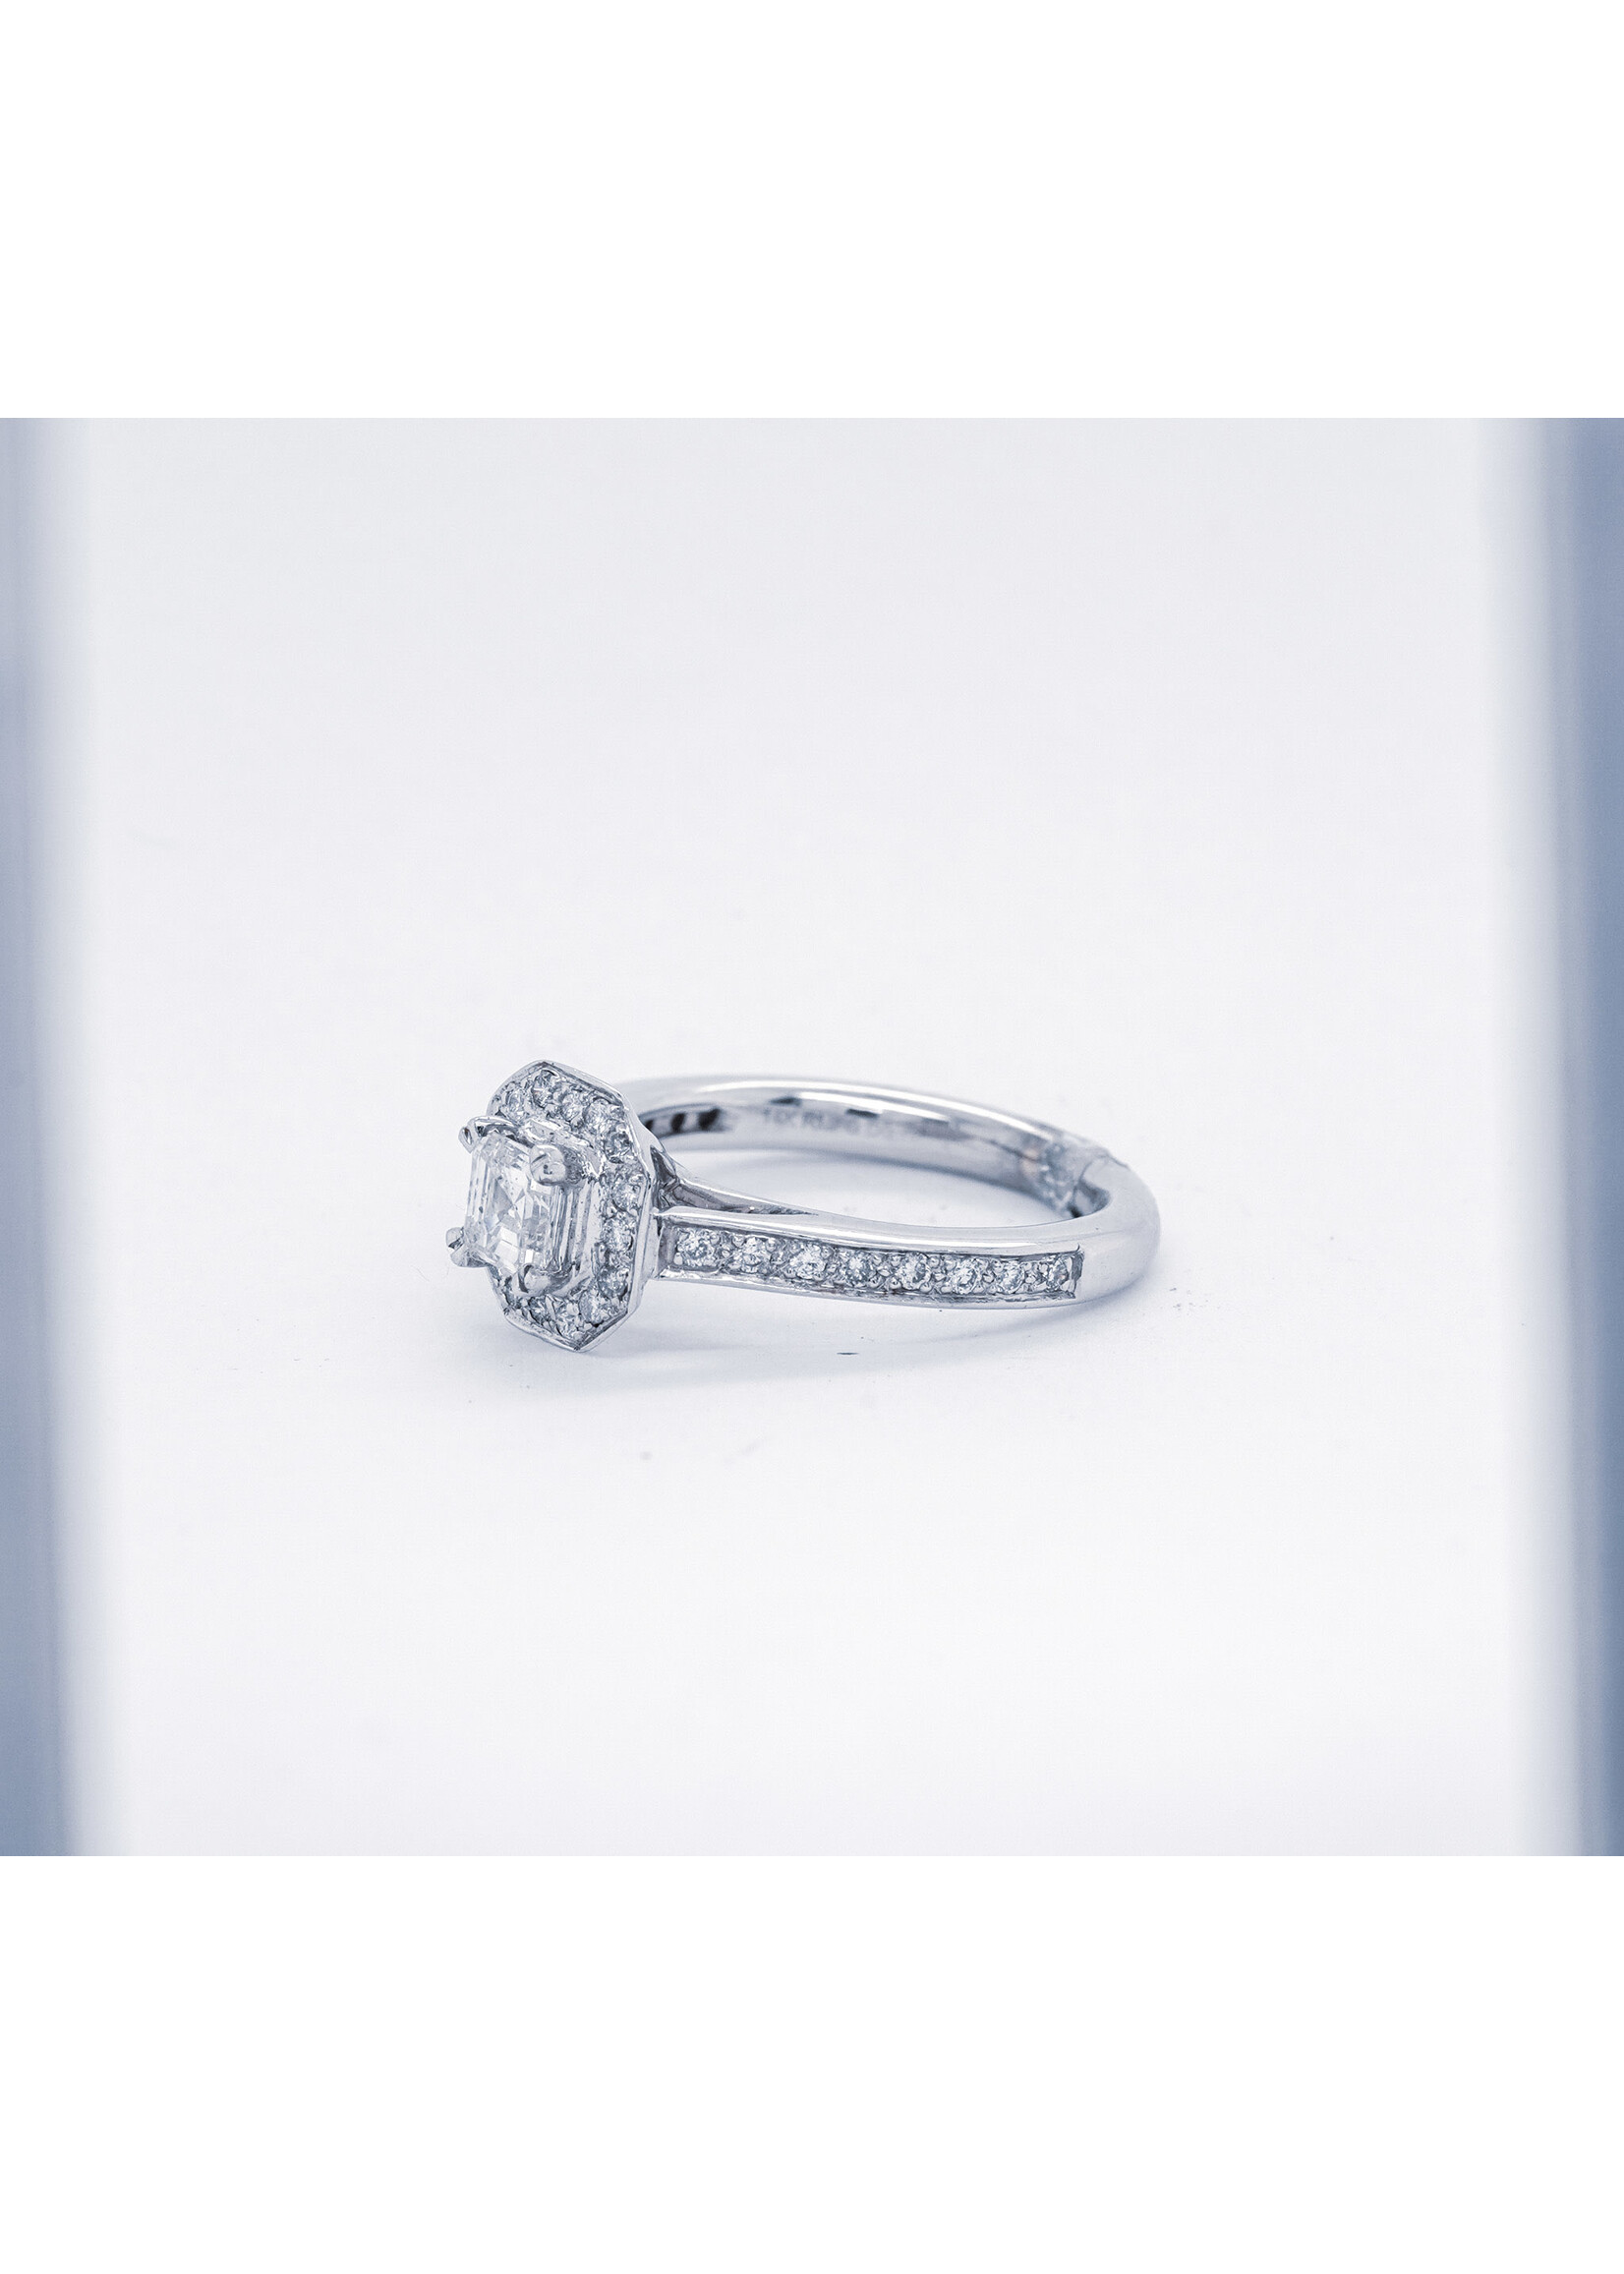 14KW 4.5g 1.0TW (.58ctr) H/SI1 Asscher Cut Diamond Halo Engagement Ring (size 5.25)